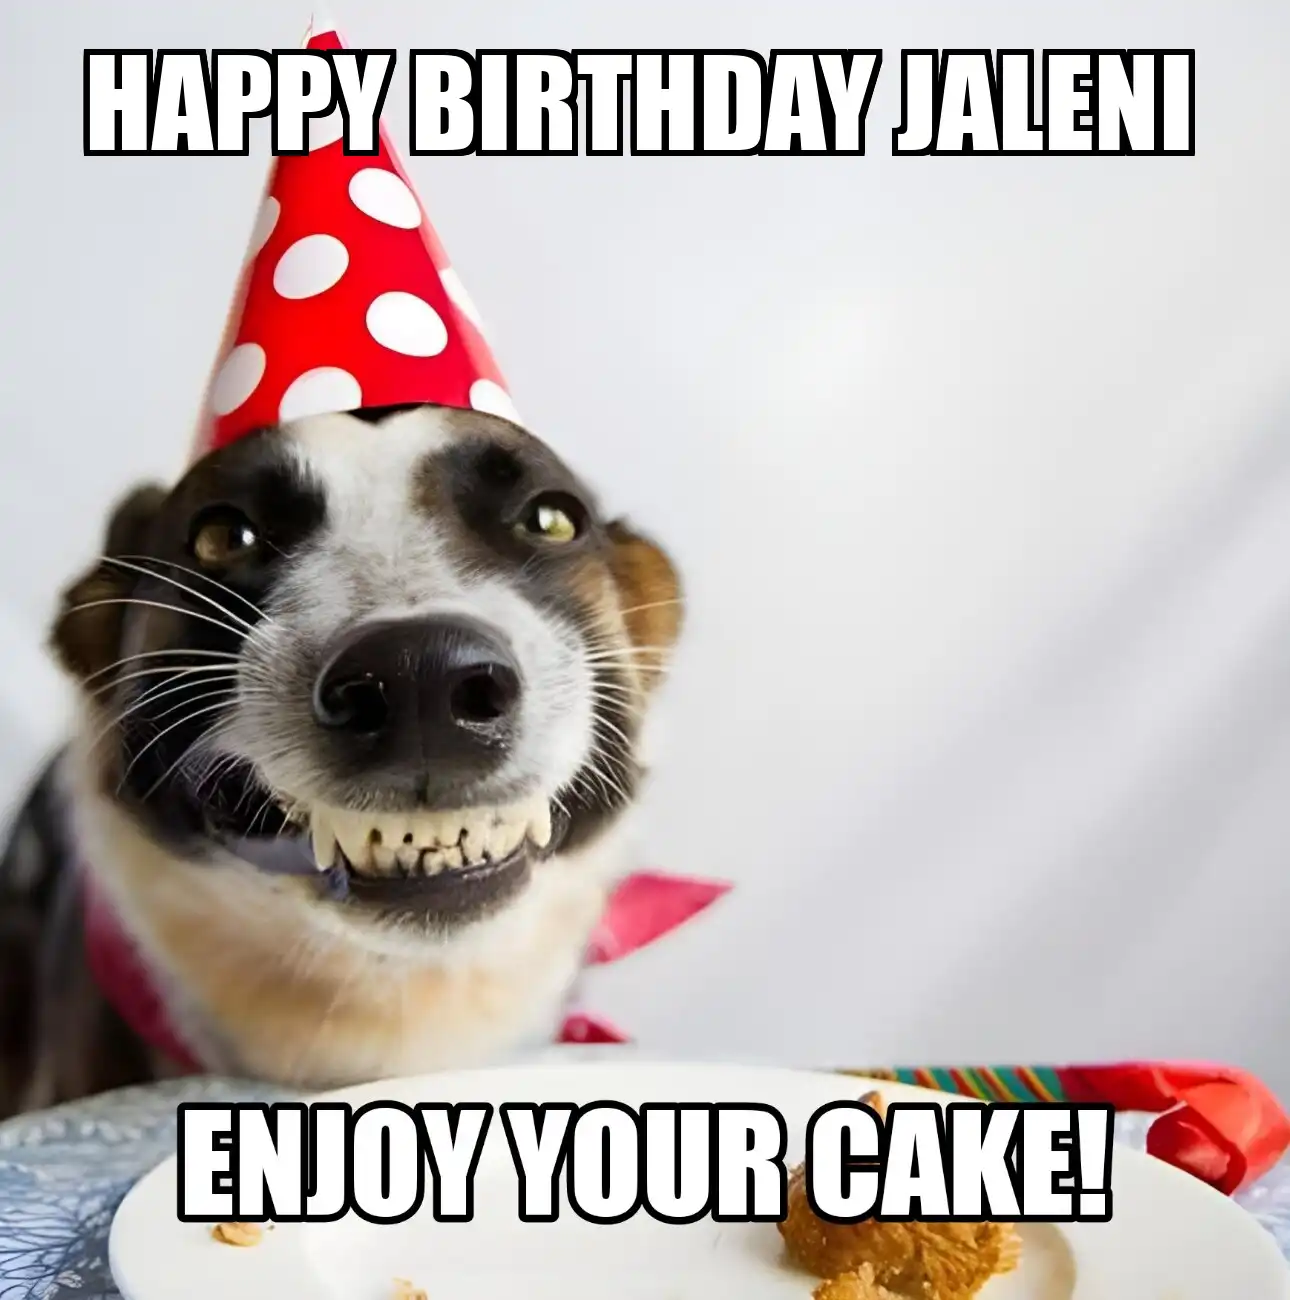 Happy Birthday Jaleni Enjoy Your Cake Dog Meme